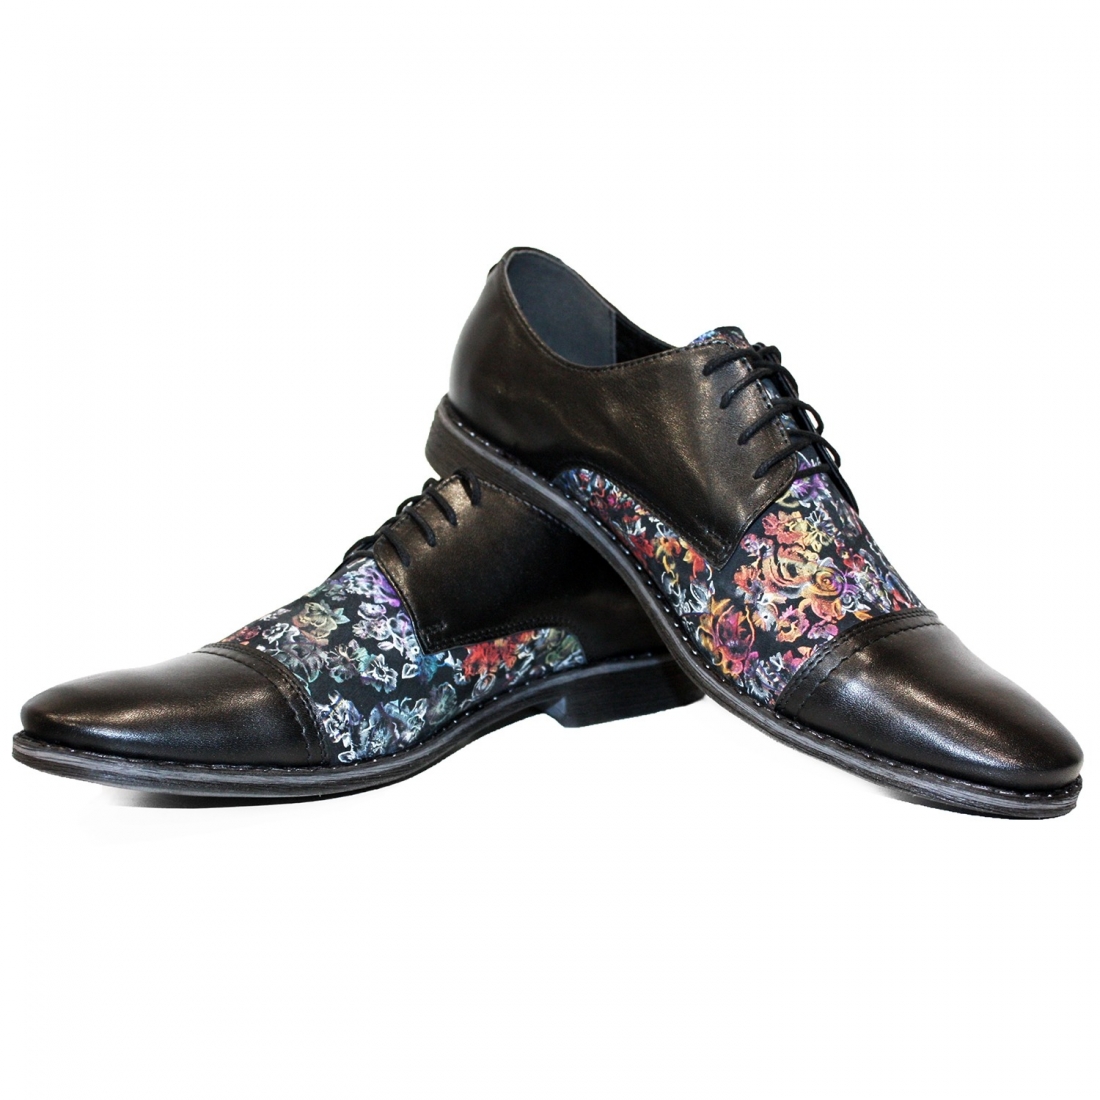 Modello Nusherro - Buty Klasyczne - Handmade Colorful Italian Leather Shoes